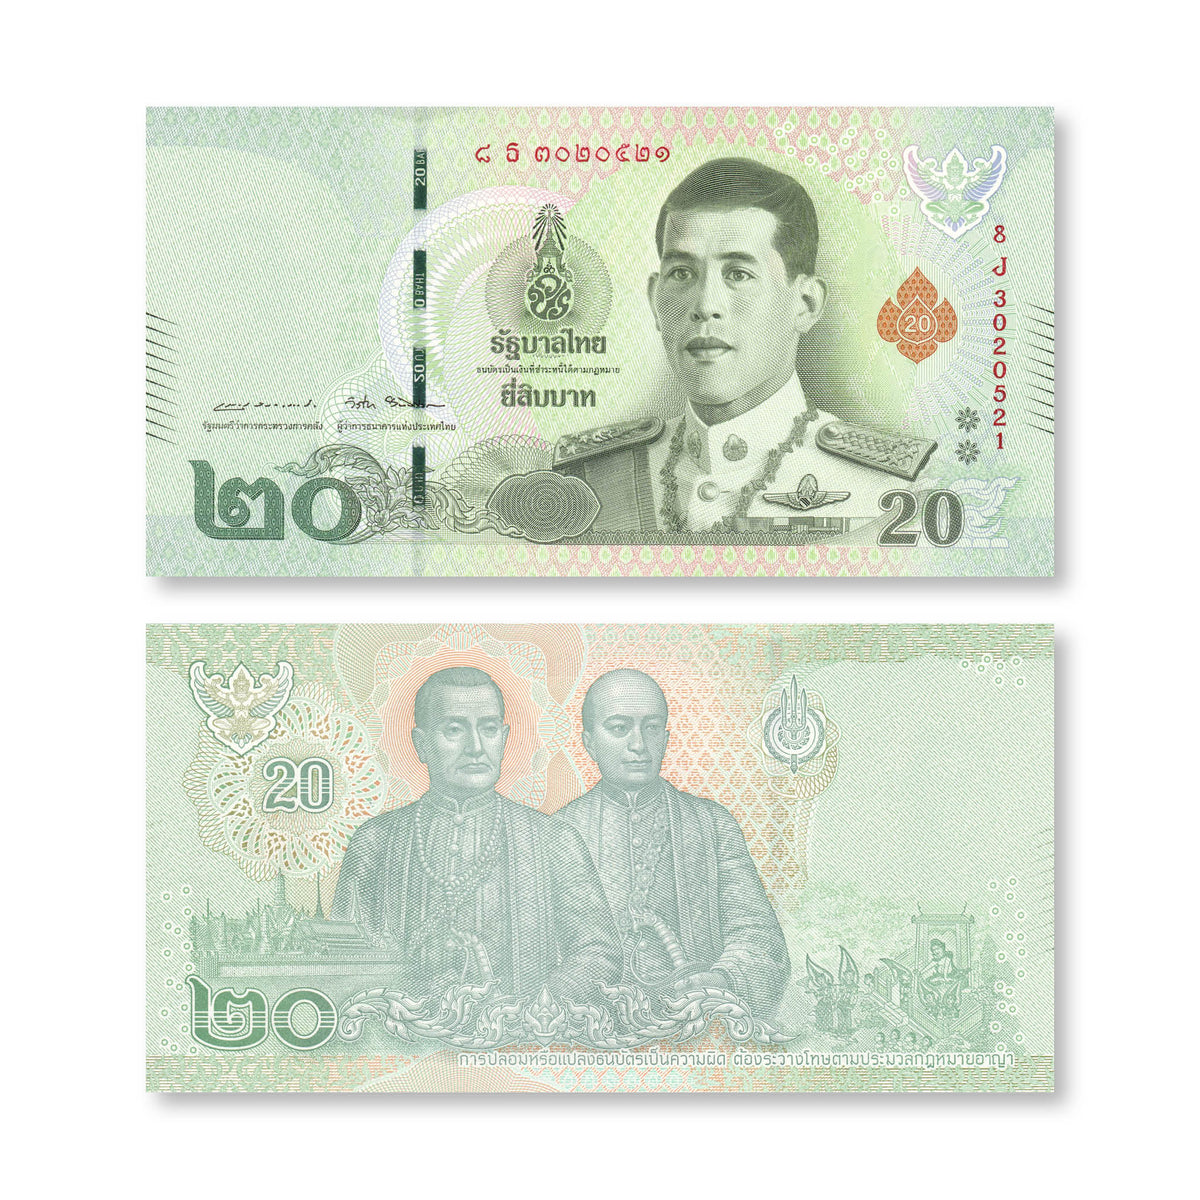 Thailand 20 Baht, 2018, B193b, P135b, UNC - Robert's World Money - World Banknotes